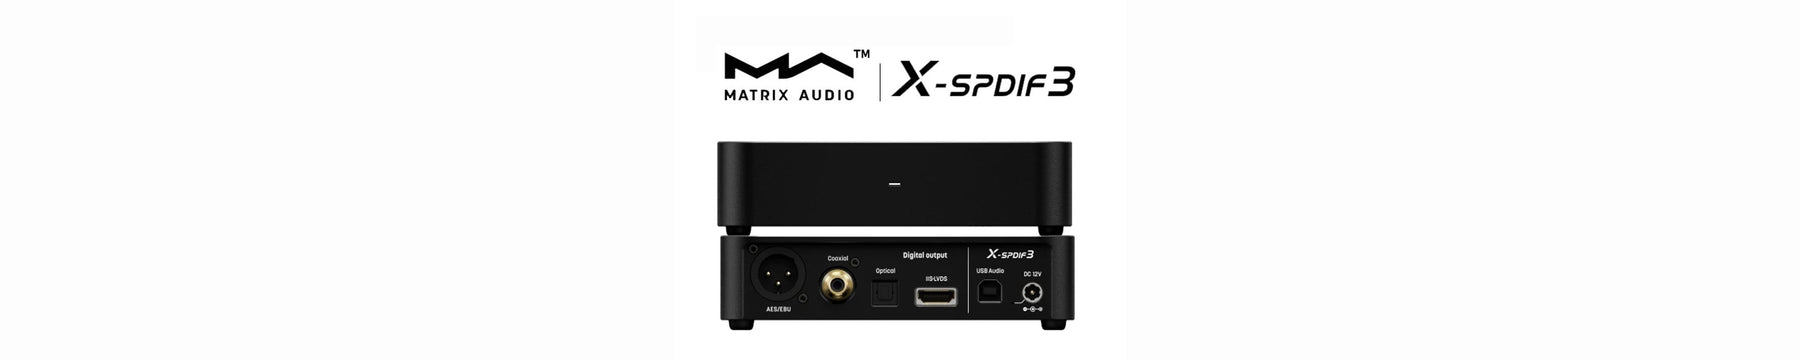 Matrix Audio Releases All-New "X-SPDIF 3" Premium Desktop USB Audio Interface!!